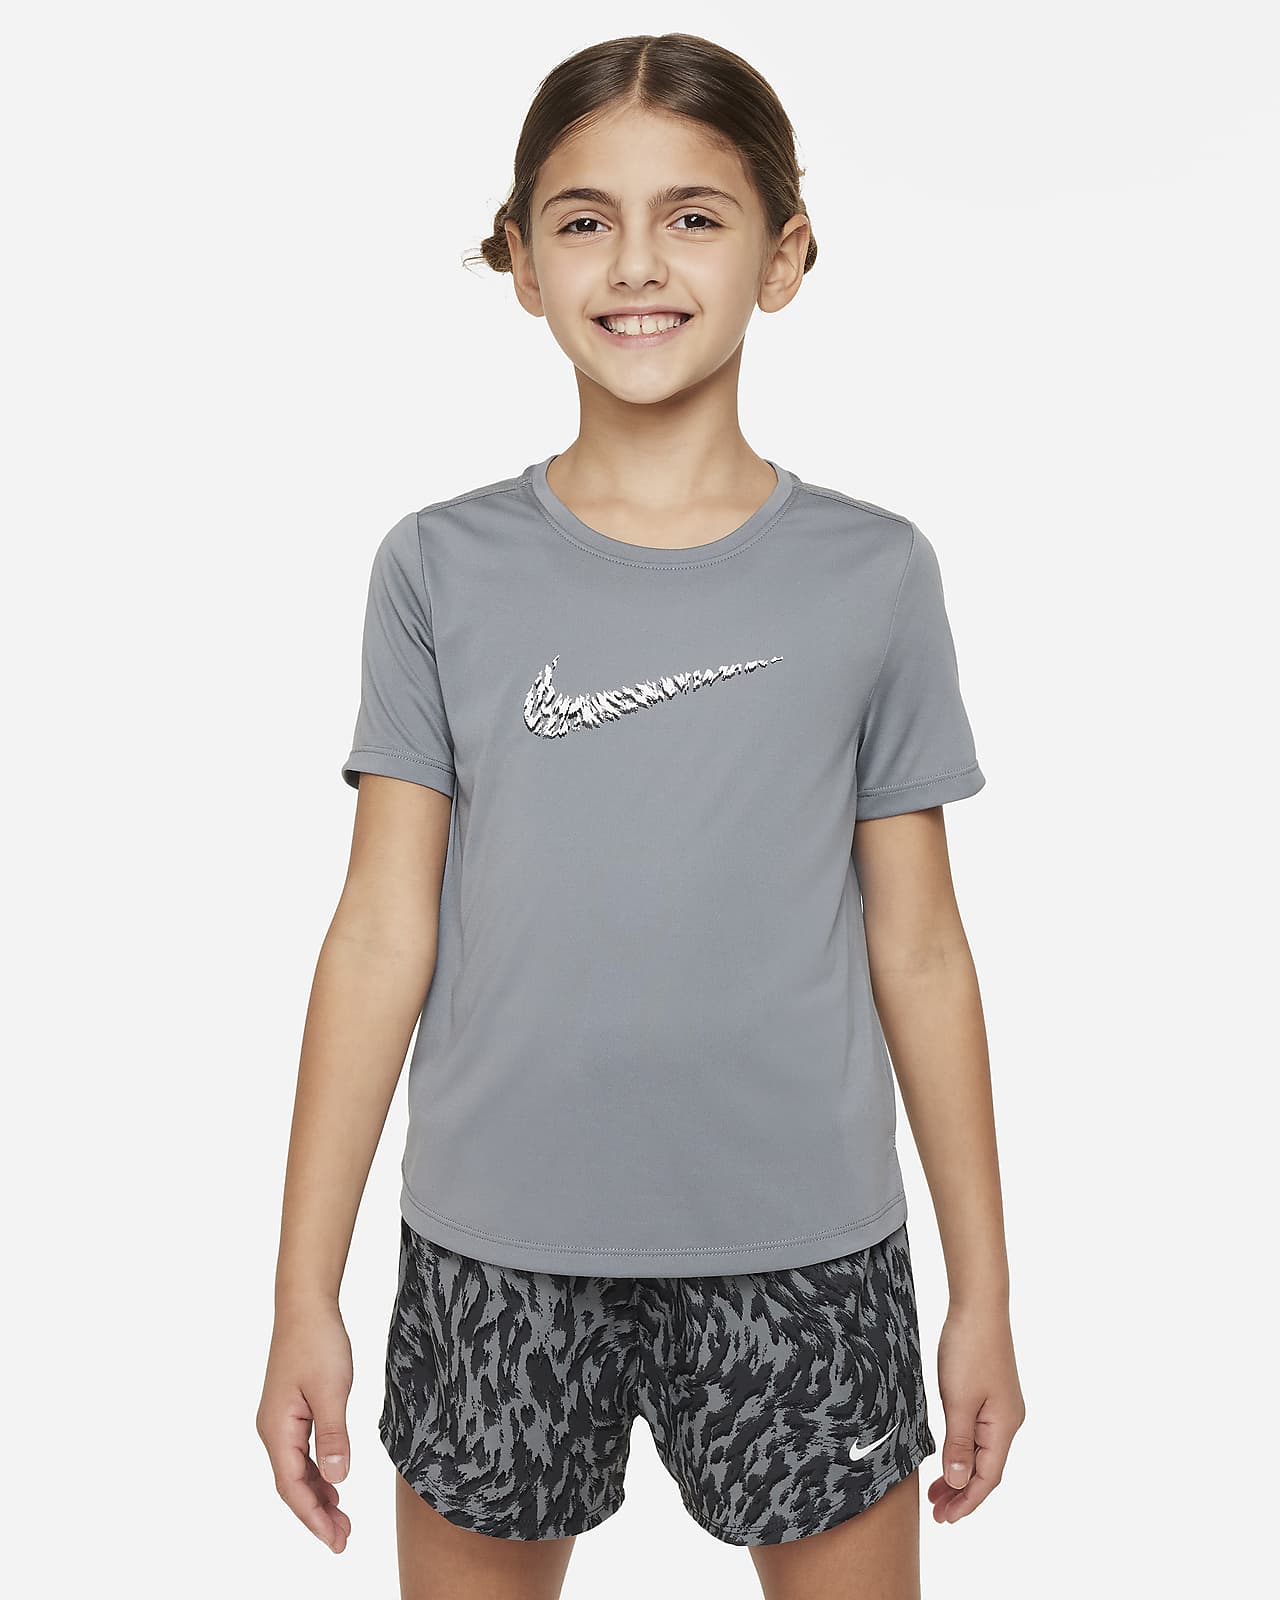 Nike One Big Kids' (Girls') Short-Sleeve Training Top